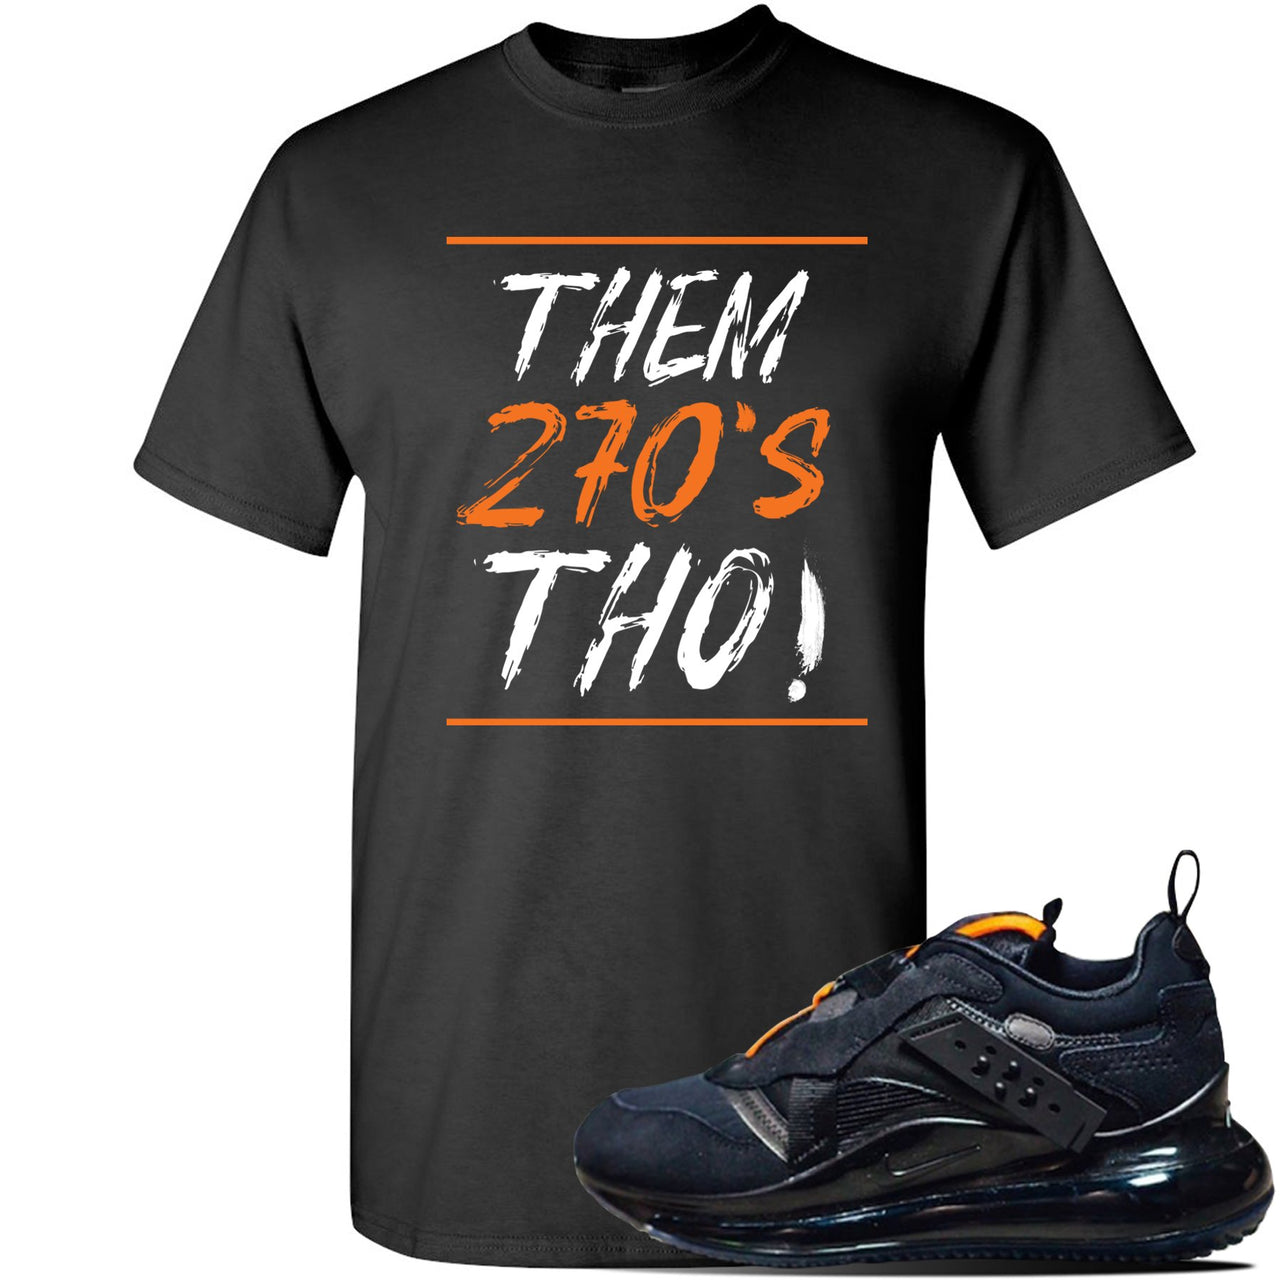 Air Max 720 OBJ Slip Sneaker Black T Shirt | Tees to match Nike Air Max 720 OBJ Slip Shoes | Them 720's Tho